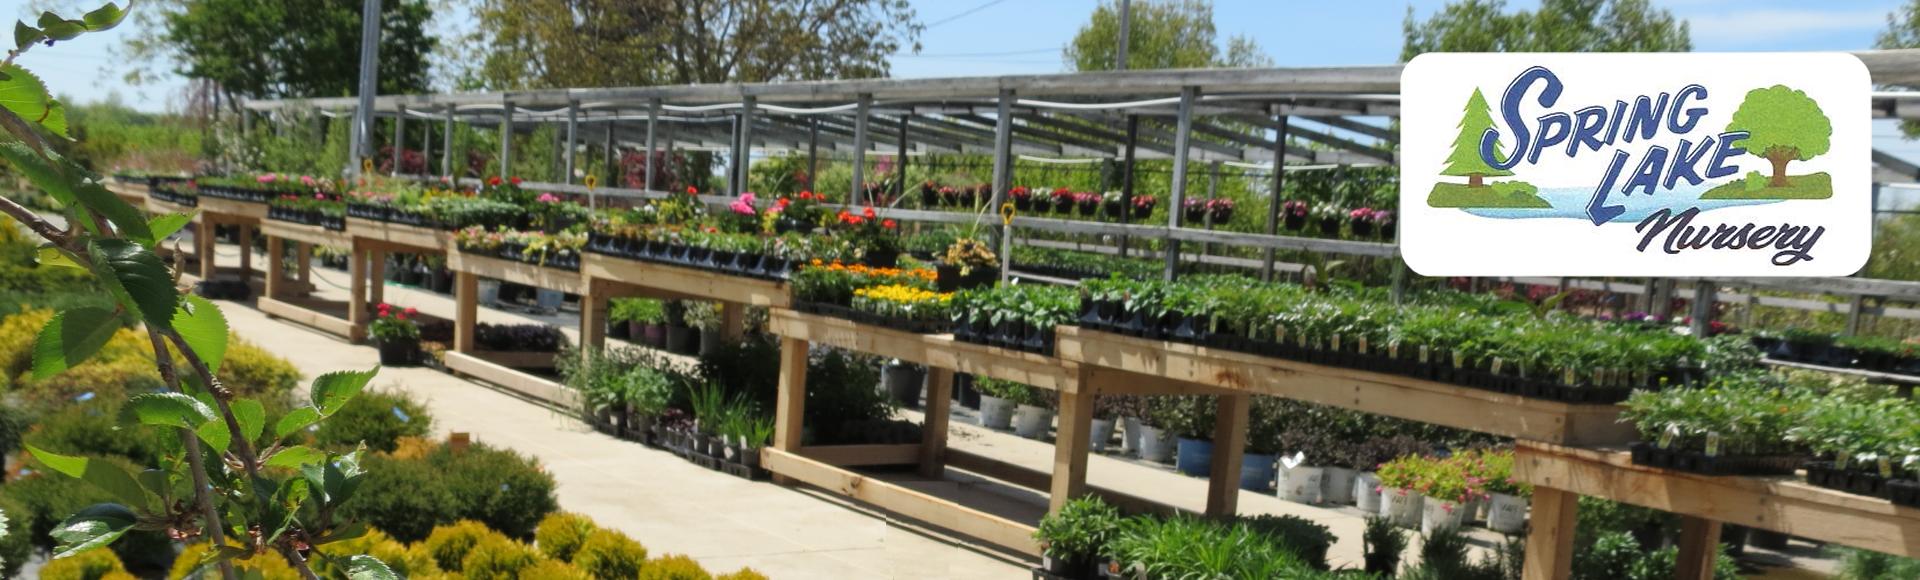 Spring Lake Nursery, Perry Ohio, wholesale and retail plants trees flowers